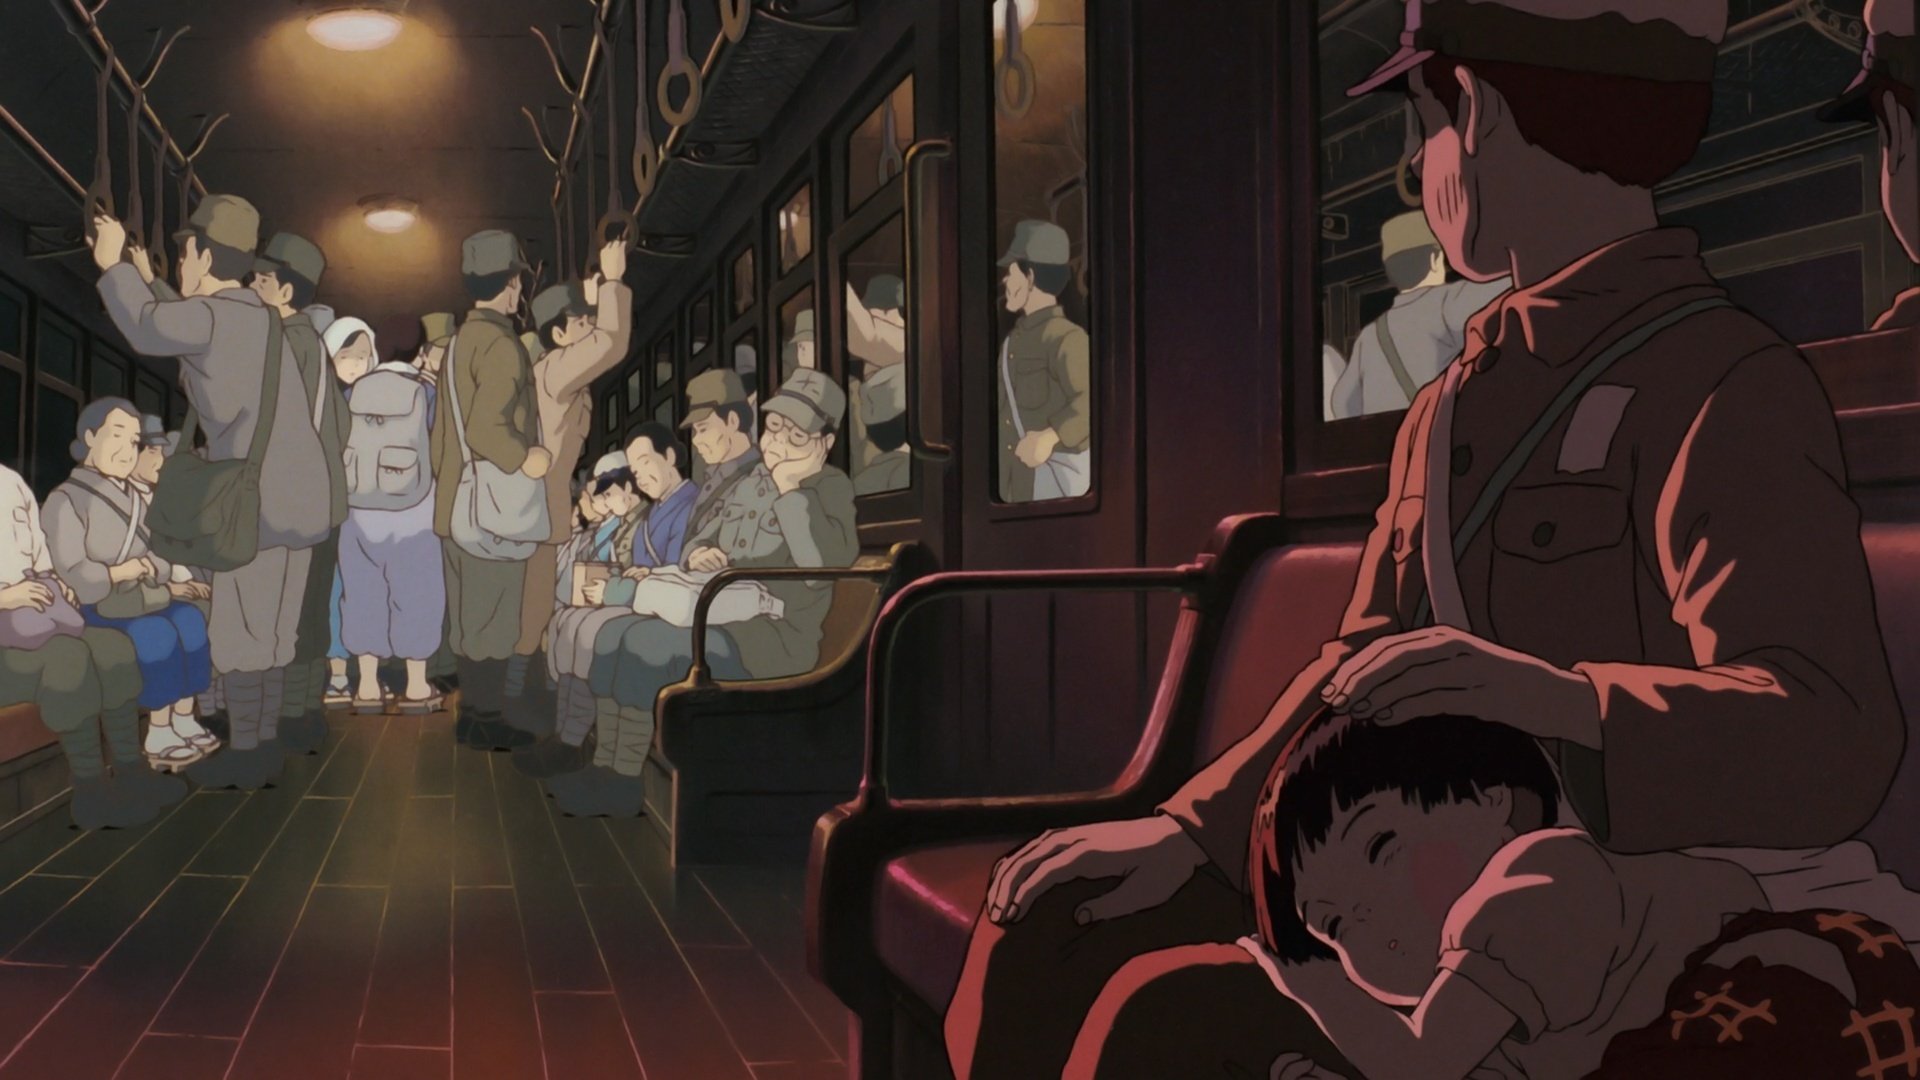 Anime 1920x1080 train Studio Ghibli anime Grave of the Fireflies